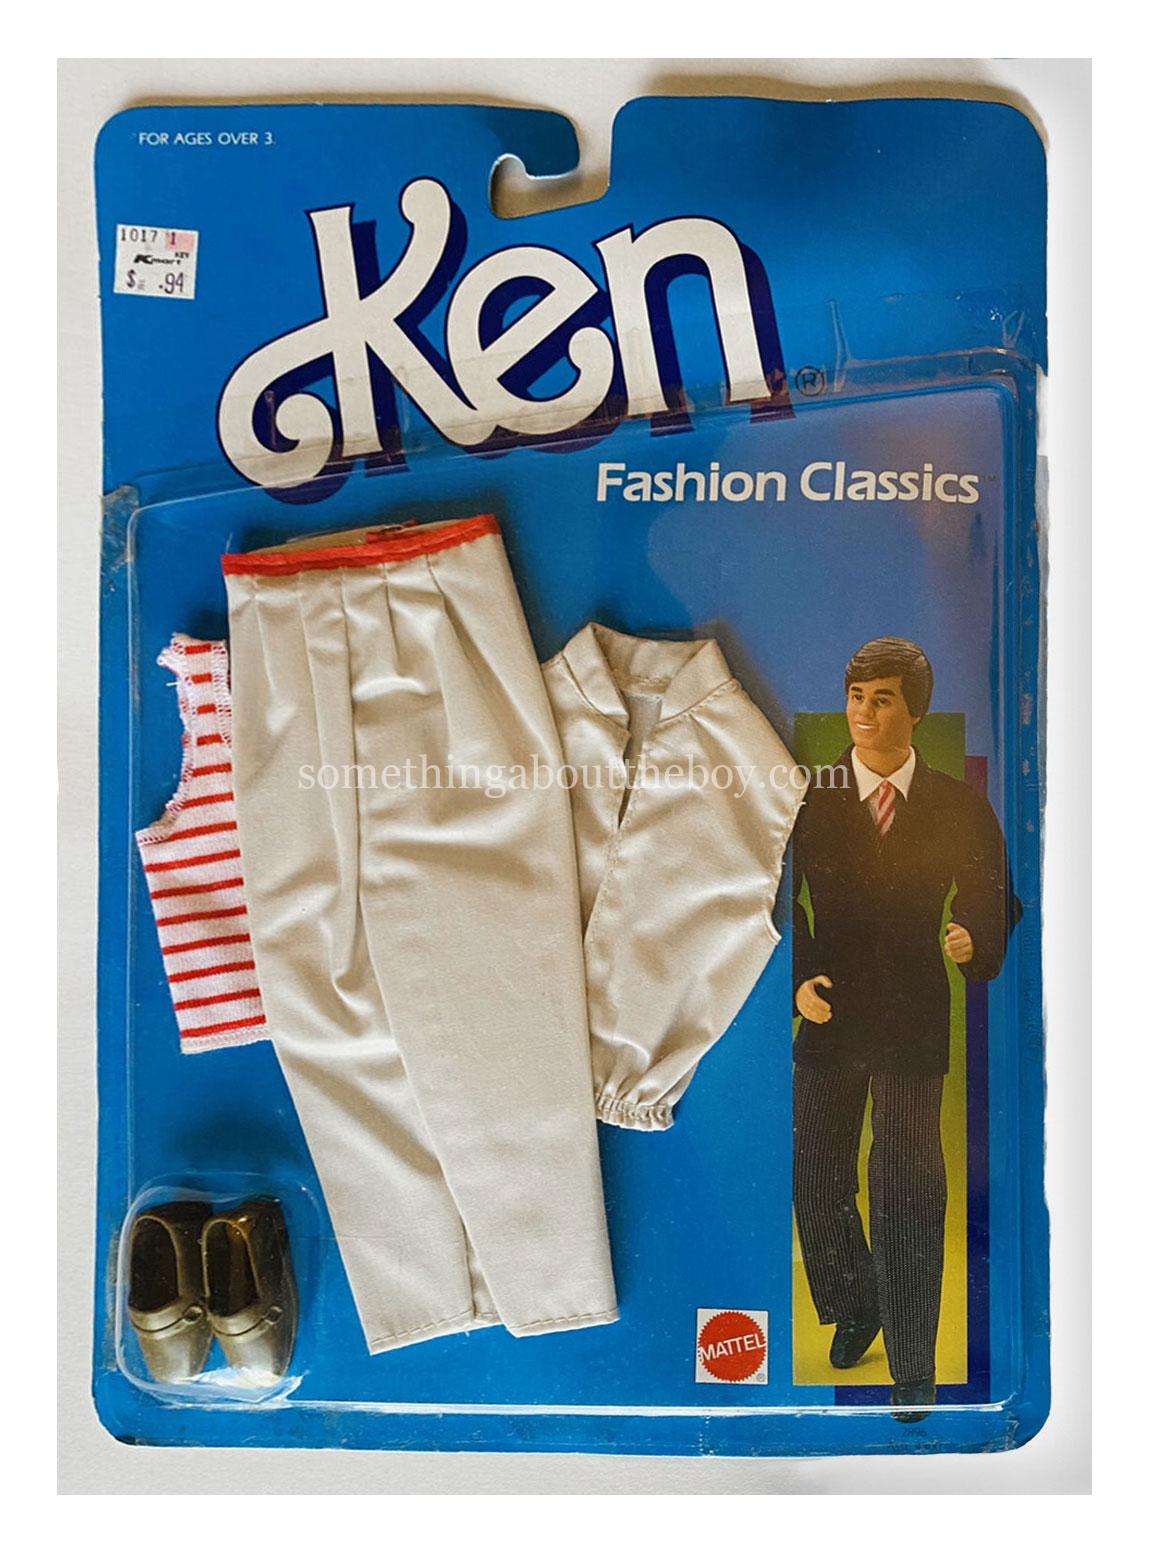 1986-87 Kmart Fashion Classics #2896 (Variation 2) in original packaging